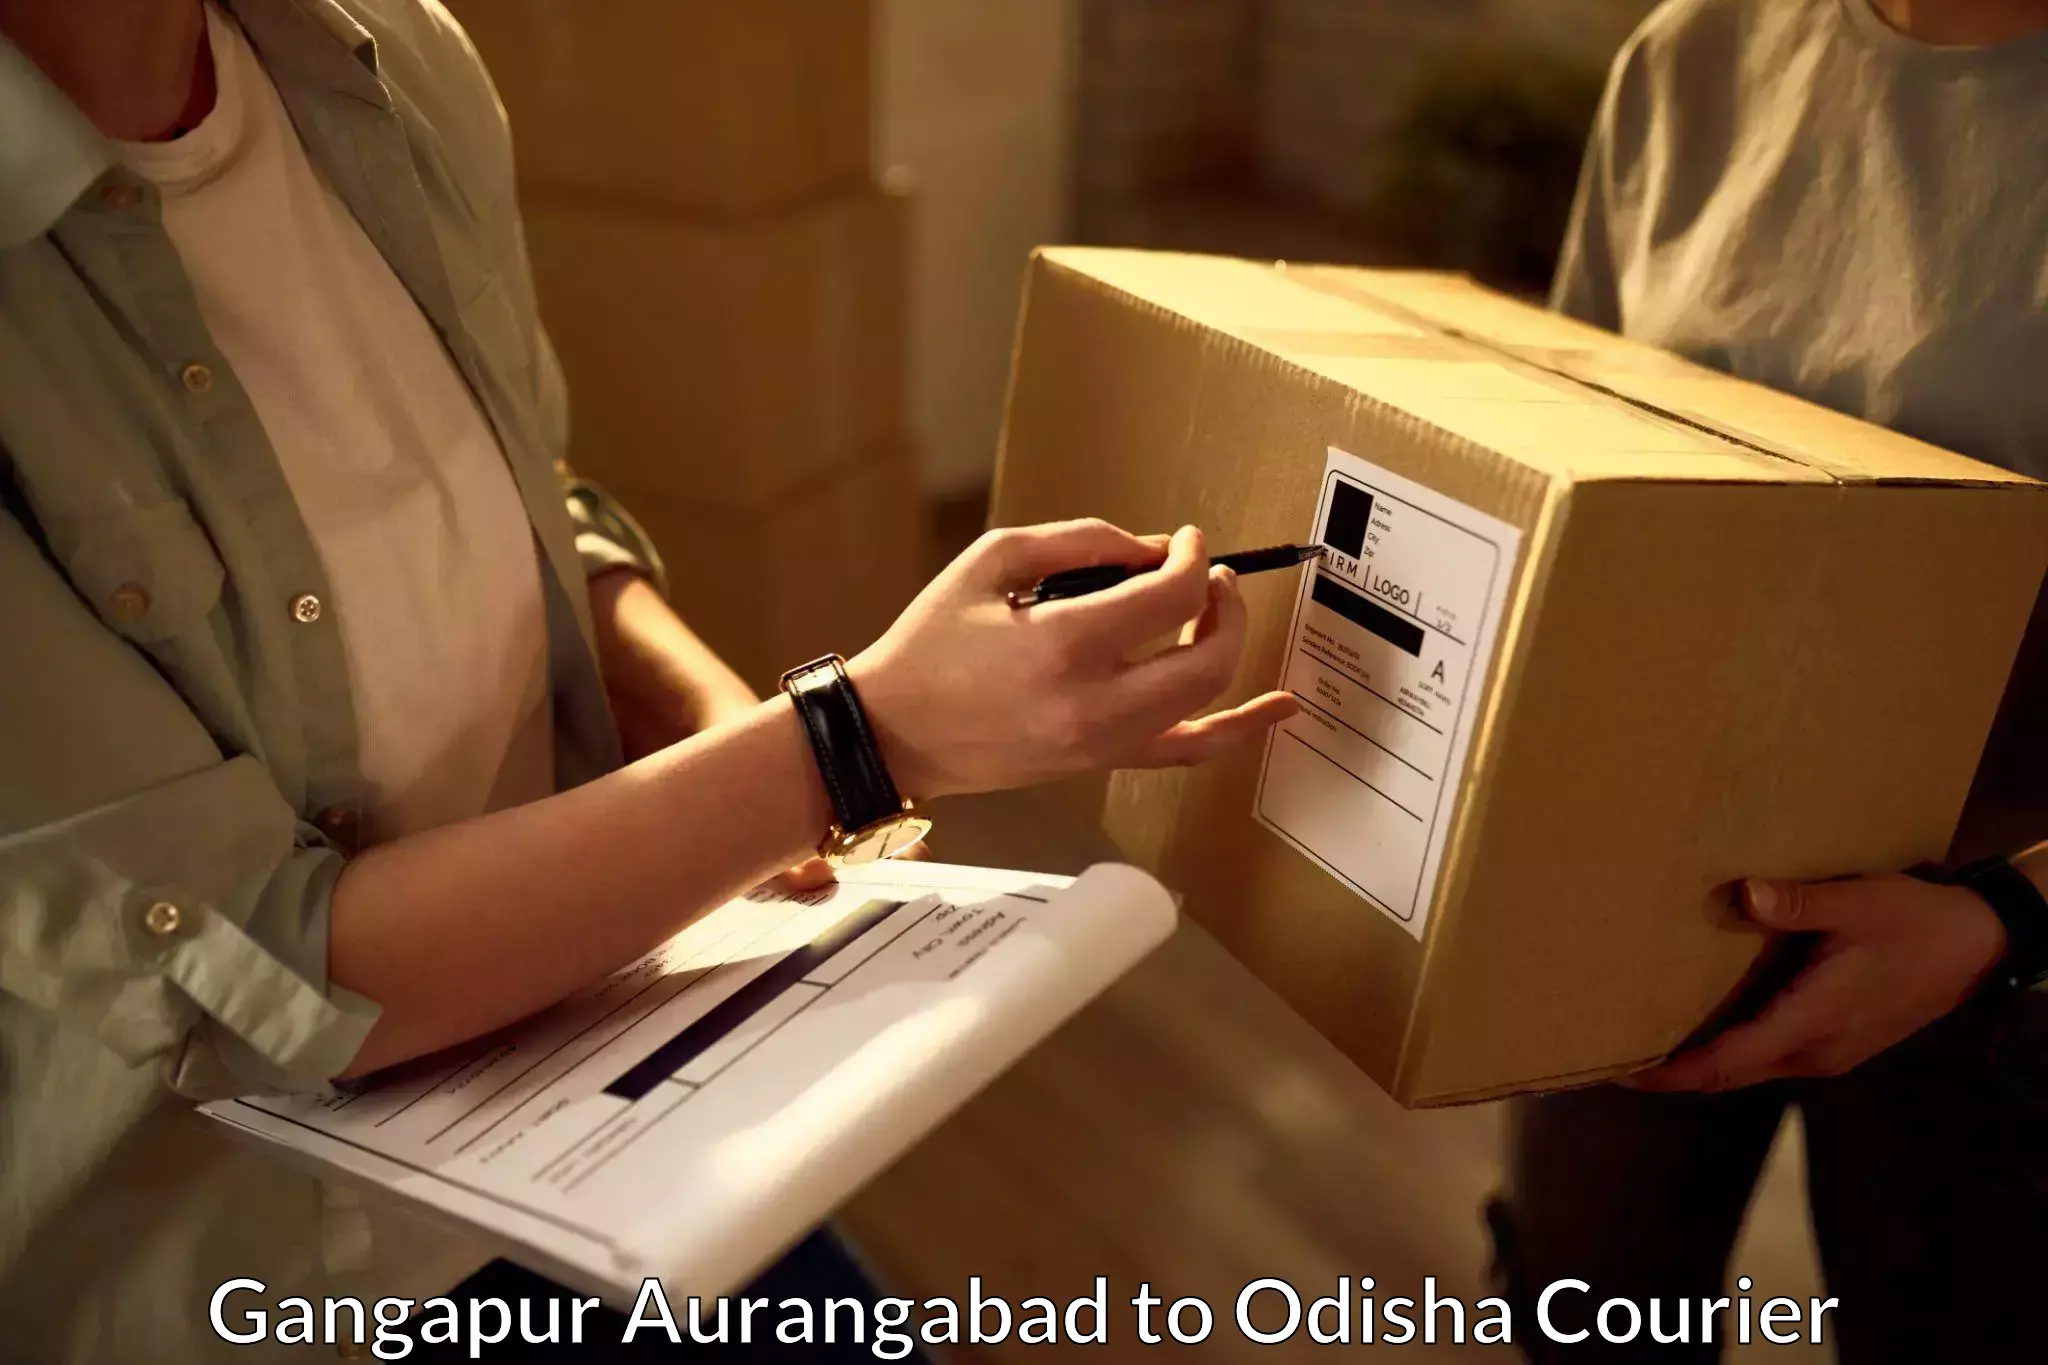 Professional courier handling Gangapur Aurangabad to Mohana